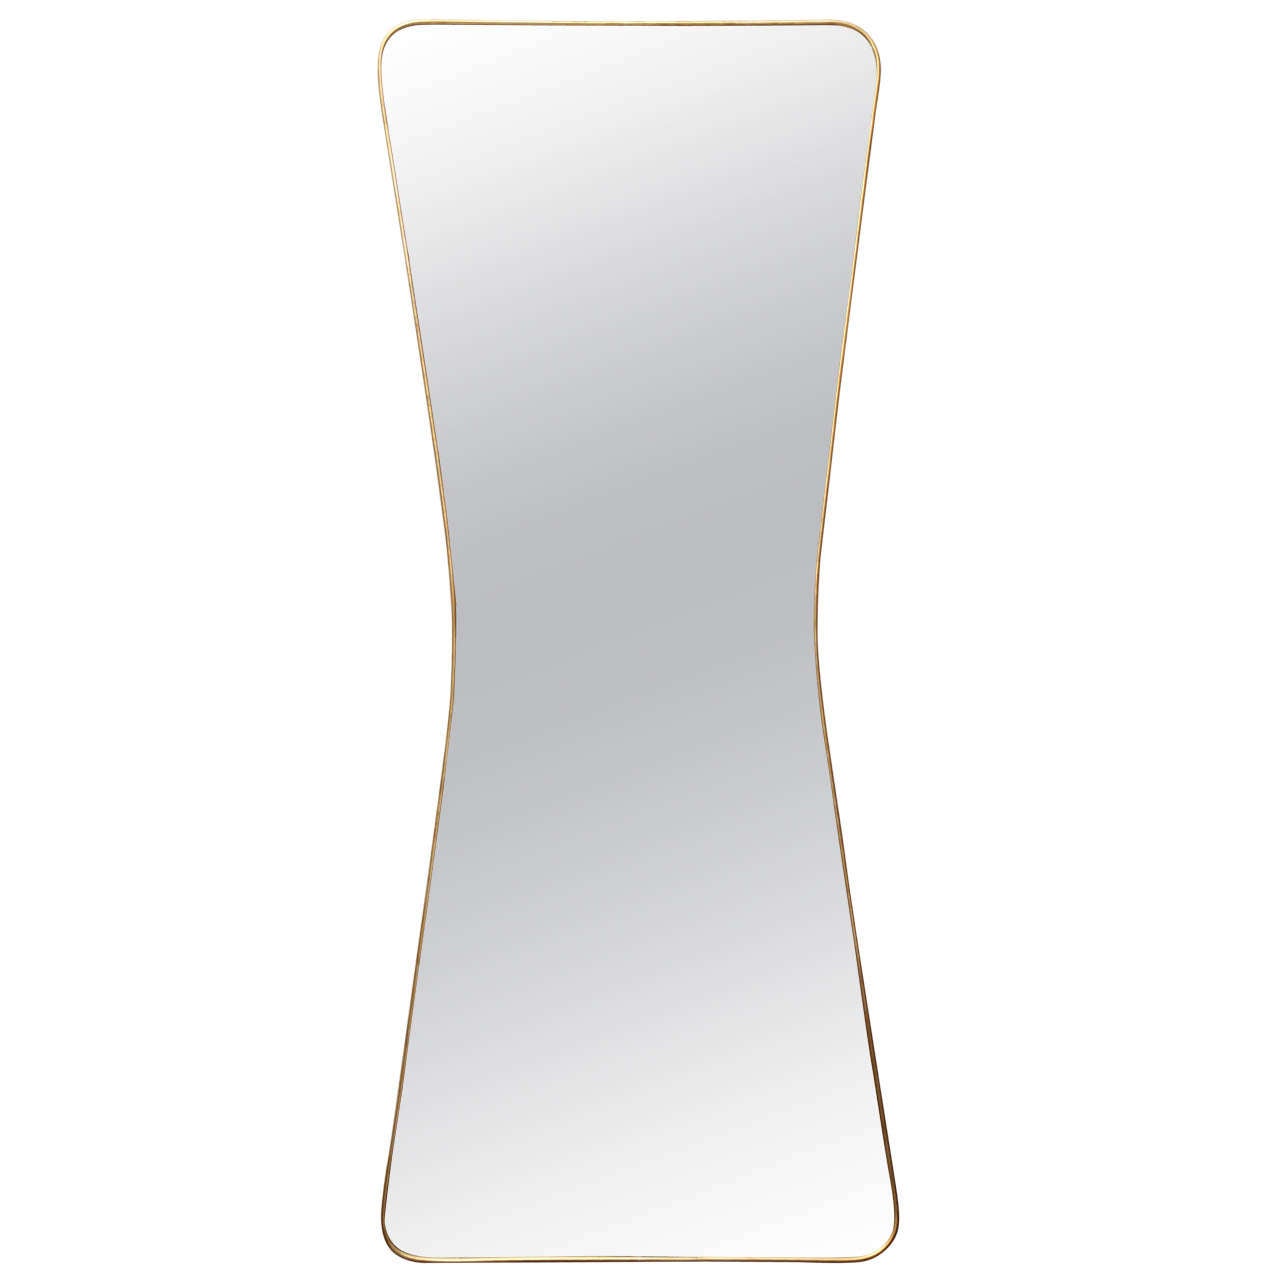 Elegant "Silhouette" Modern Mid-Century Wall Mirror